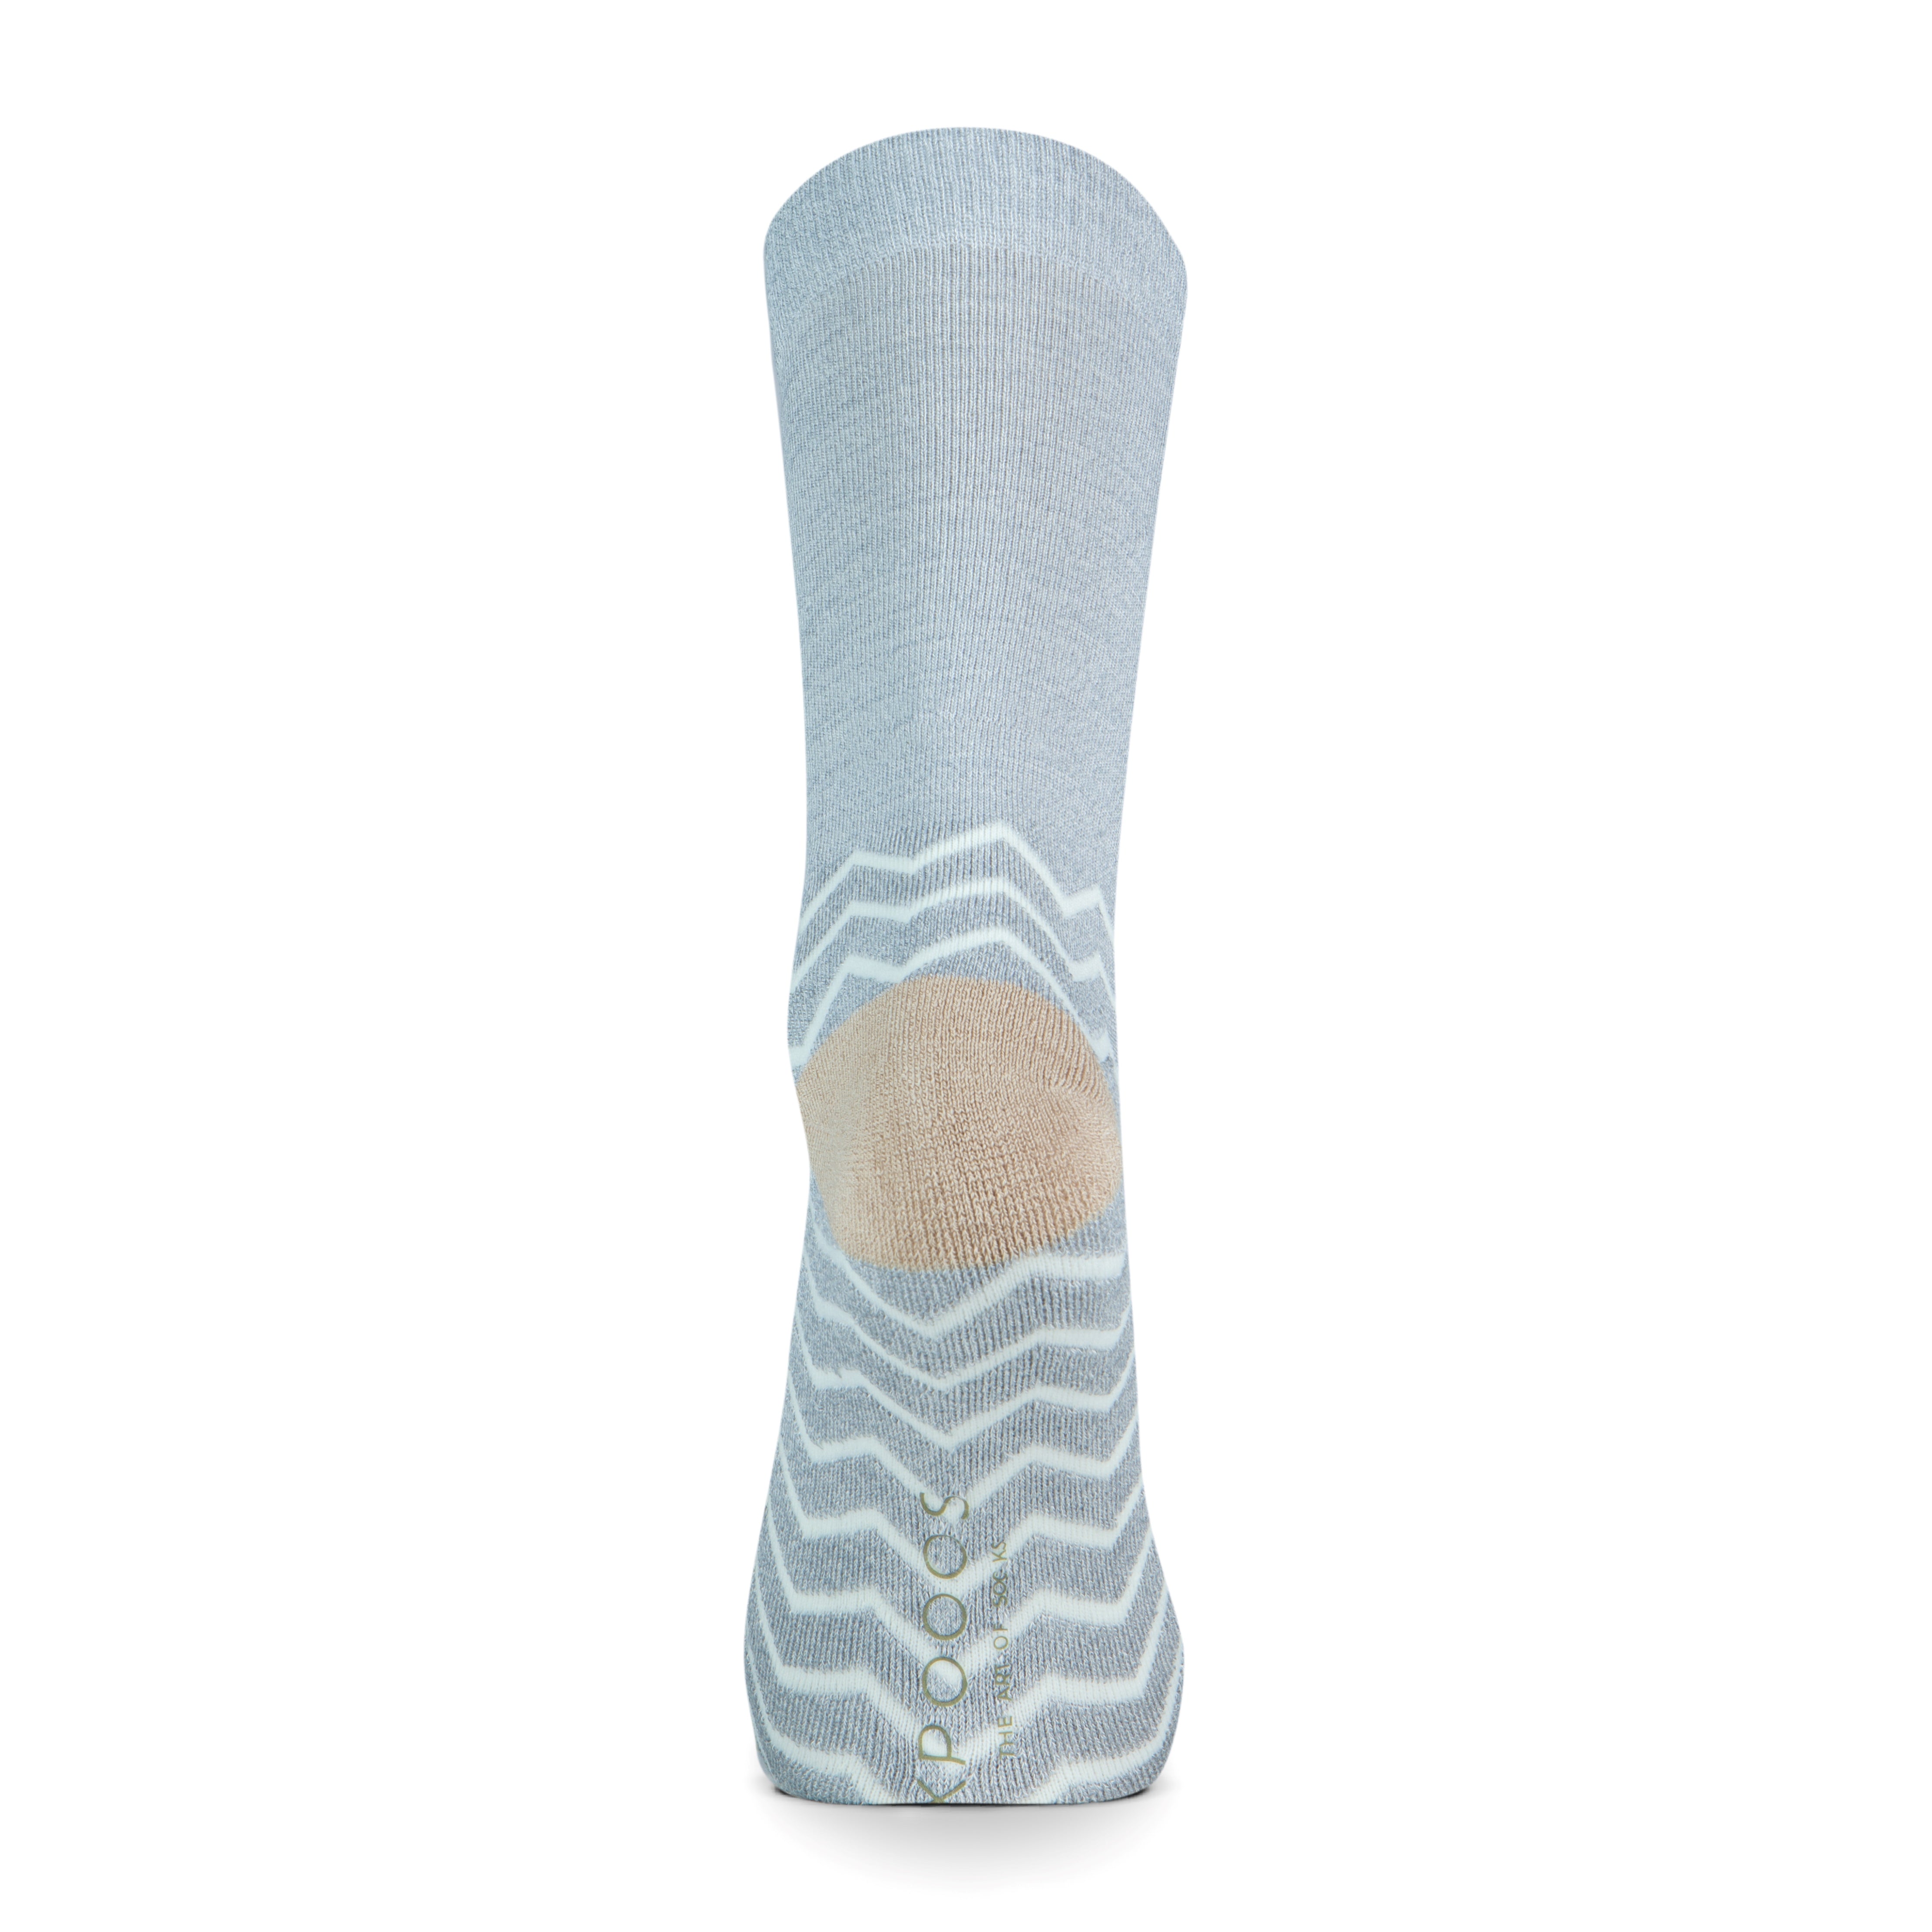 Dubai women's socks Light Grey